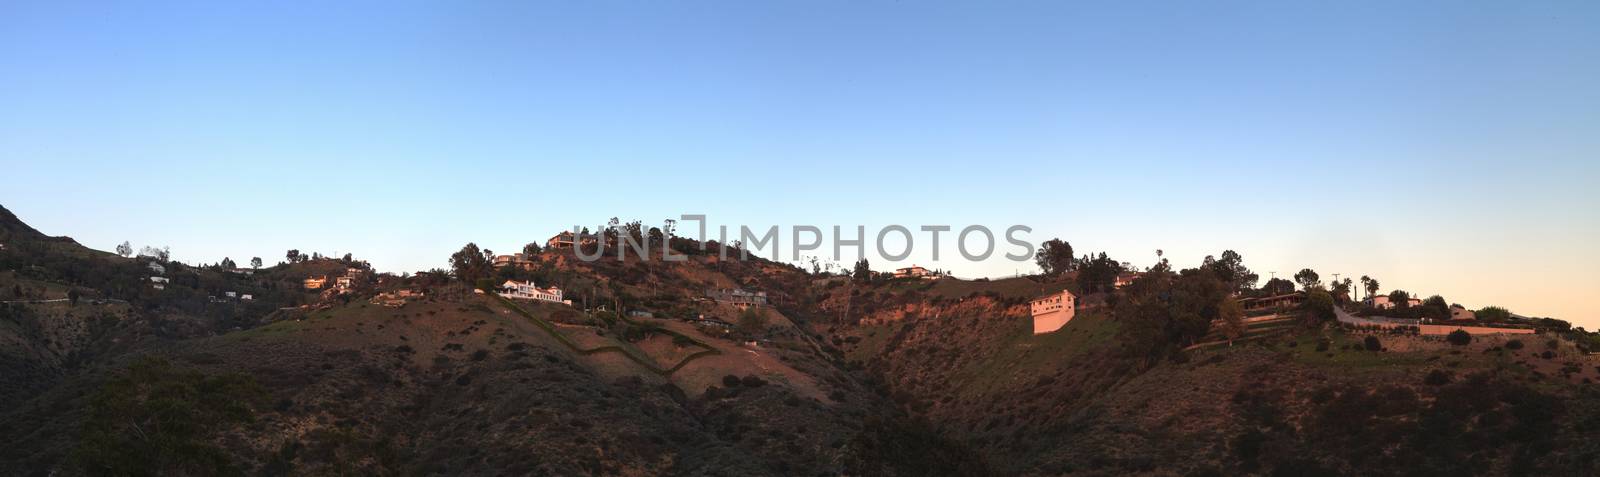 Malibu hillside at sunset by steffstarr